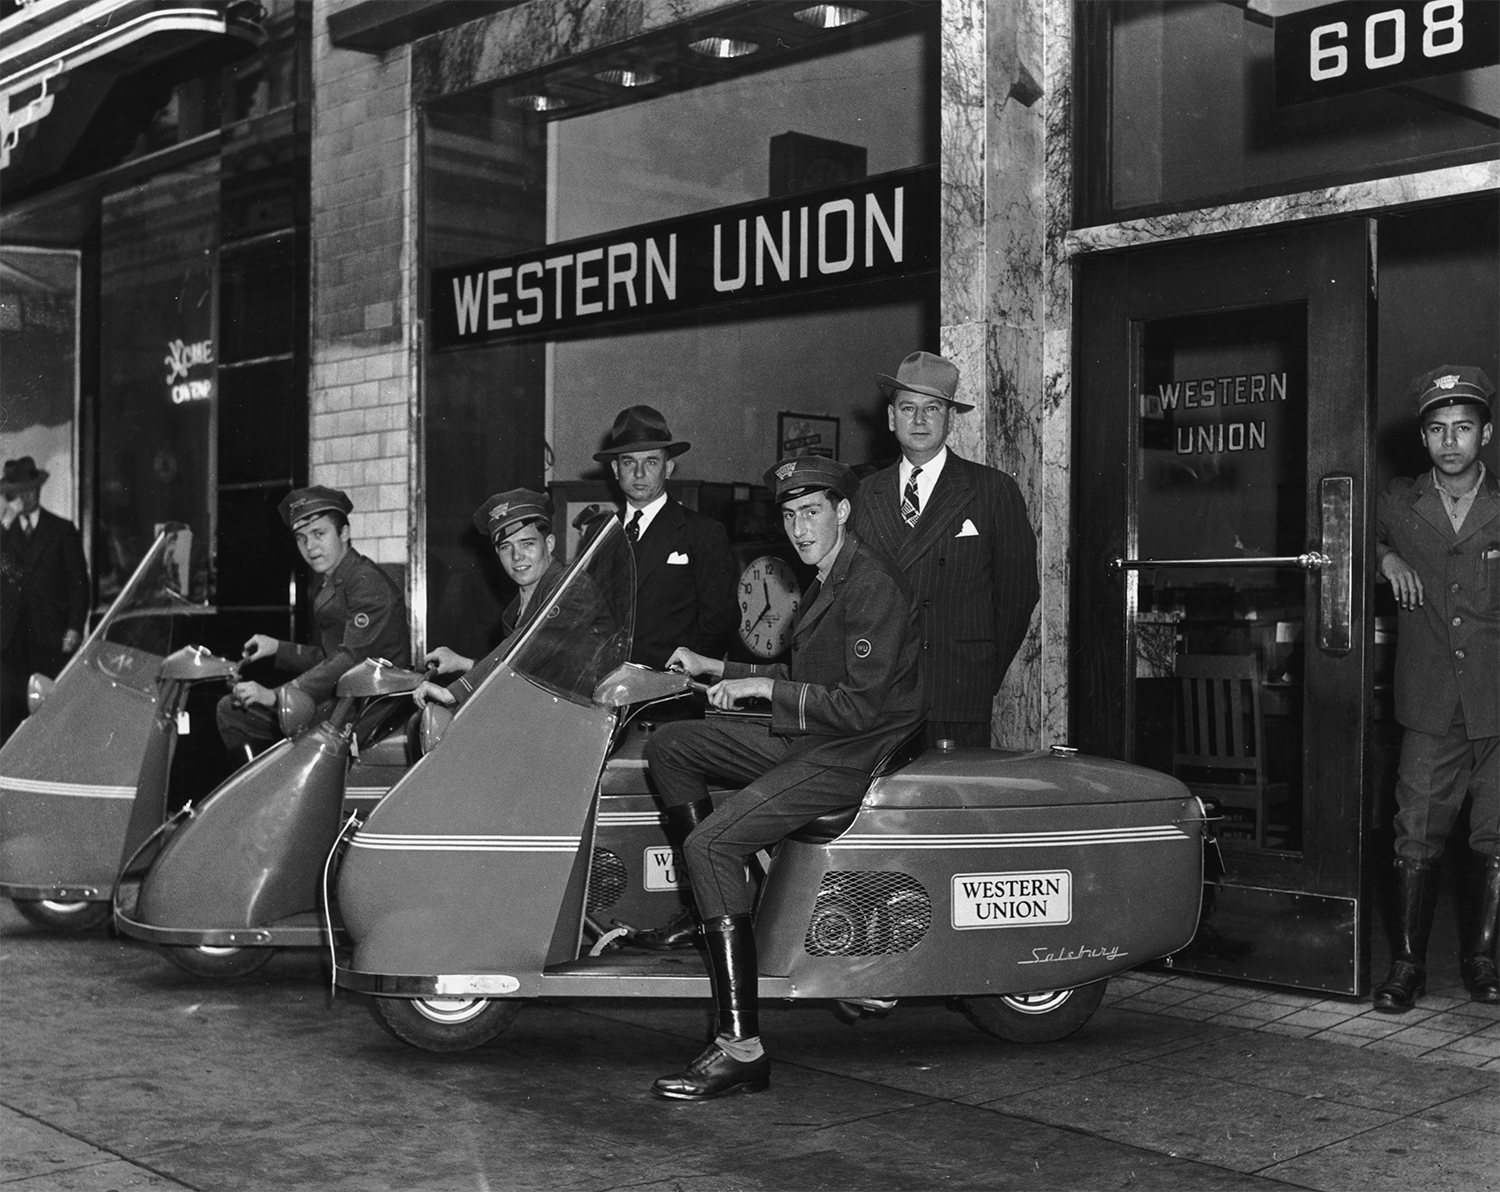 [image] Western Union messengers